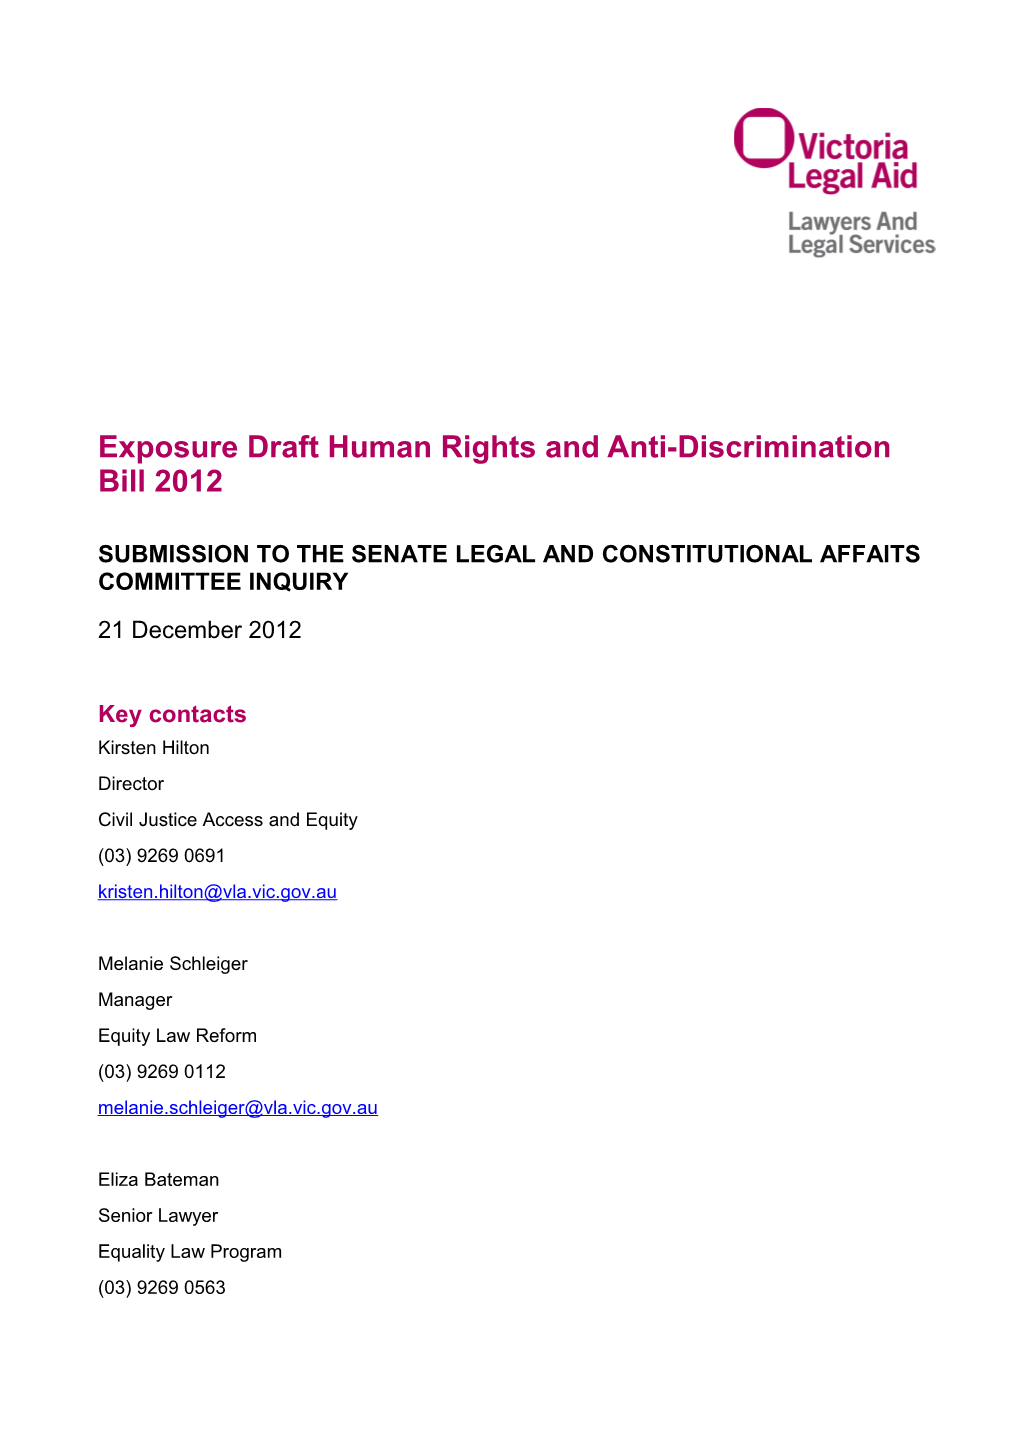 Exposure Draft Human Rights and Anti-Discrimination Bill 2012